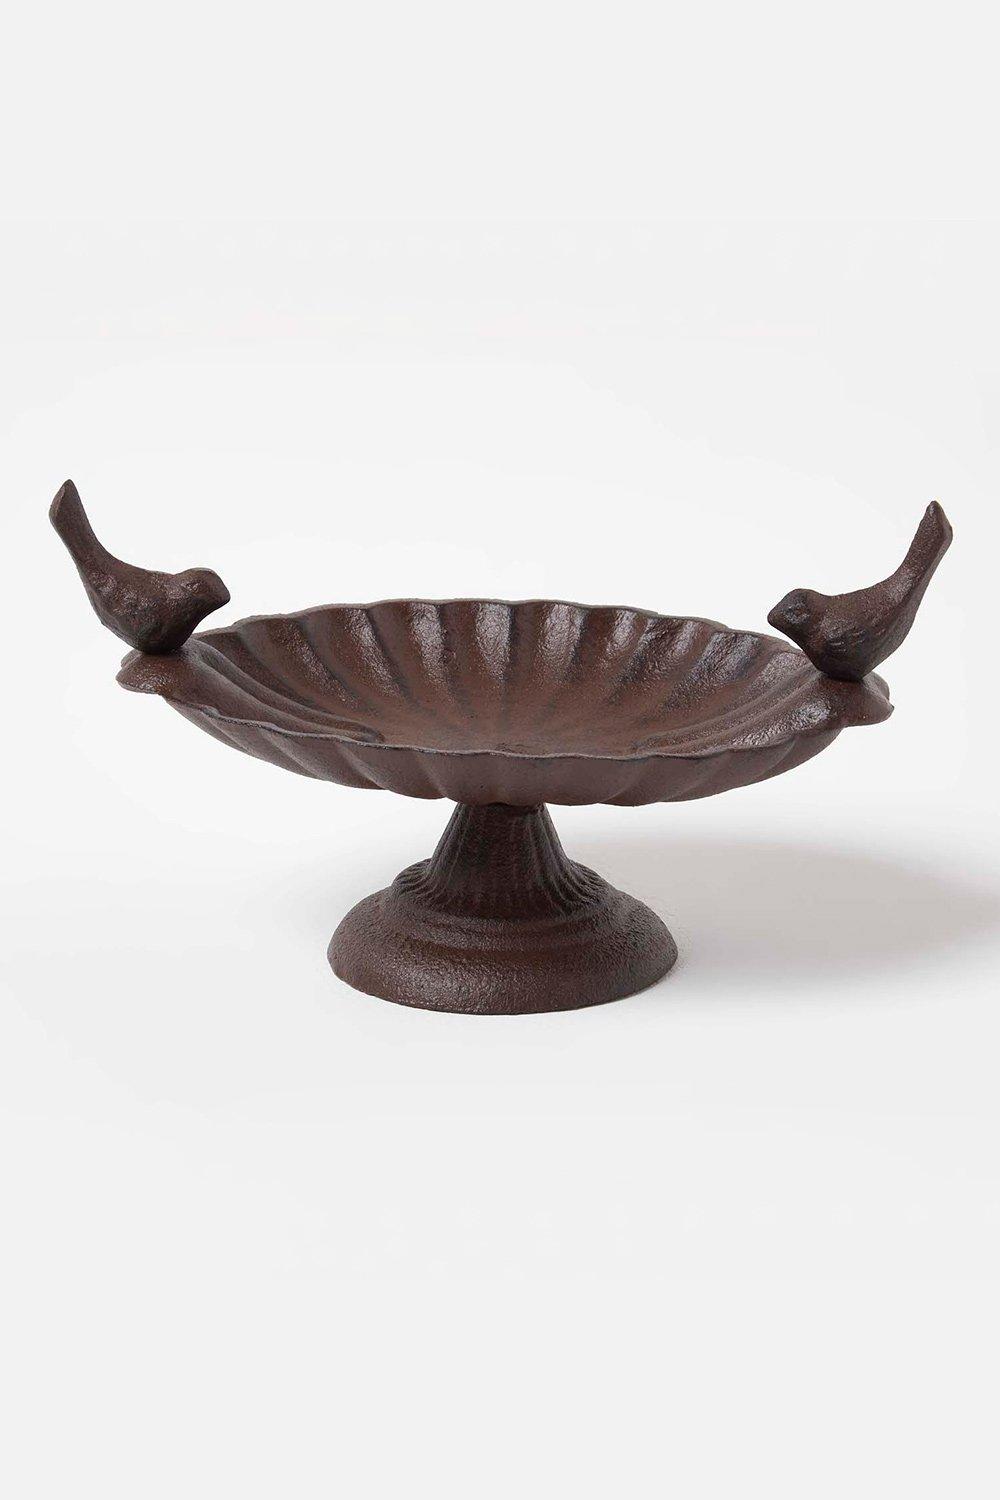 Homescapes Decorative Birds Scalloped Oval Bird Bath Cast Iron|brown